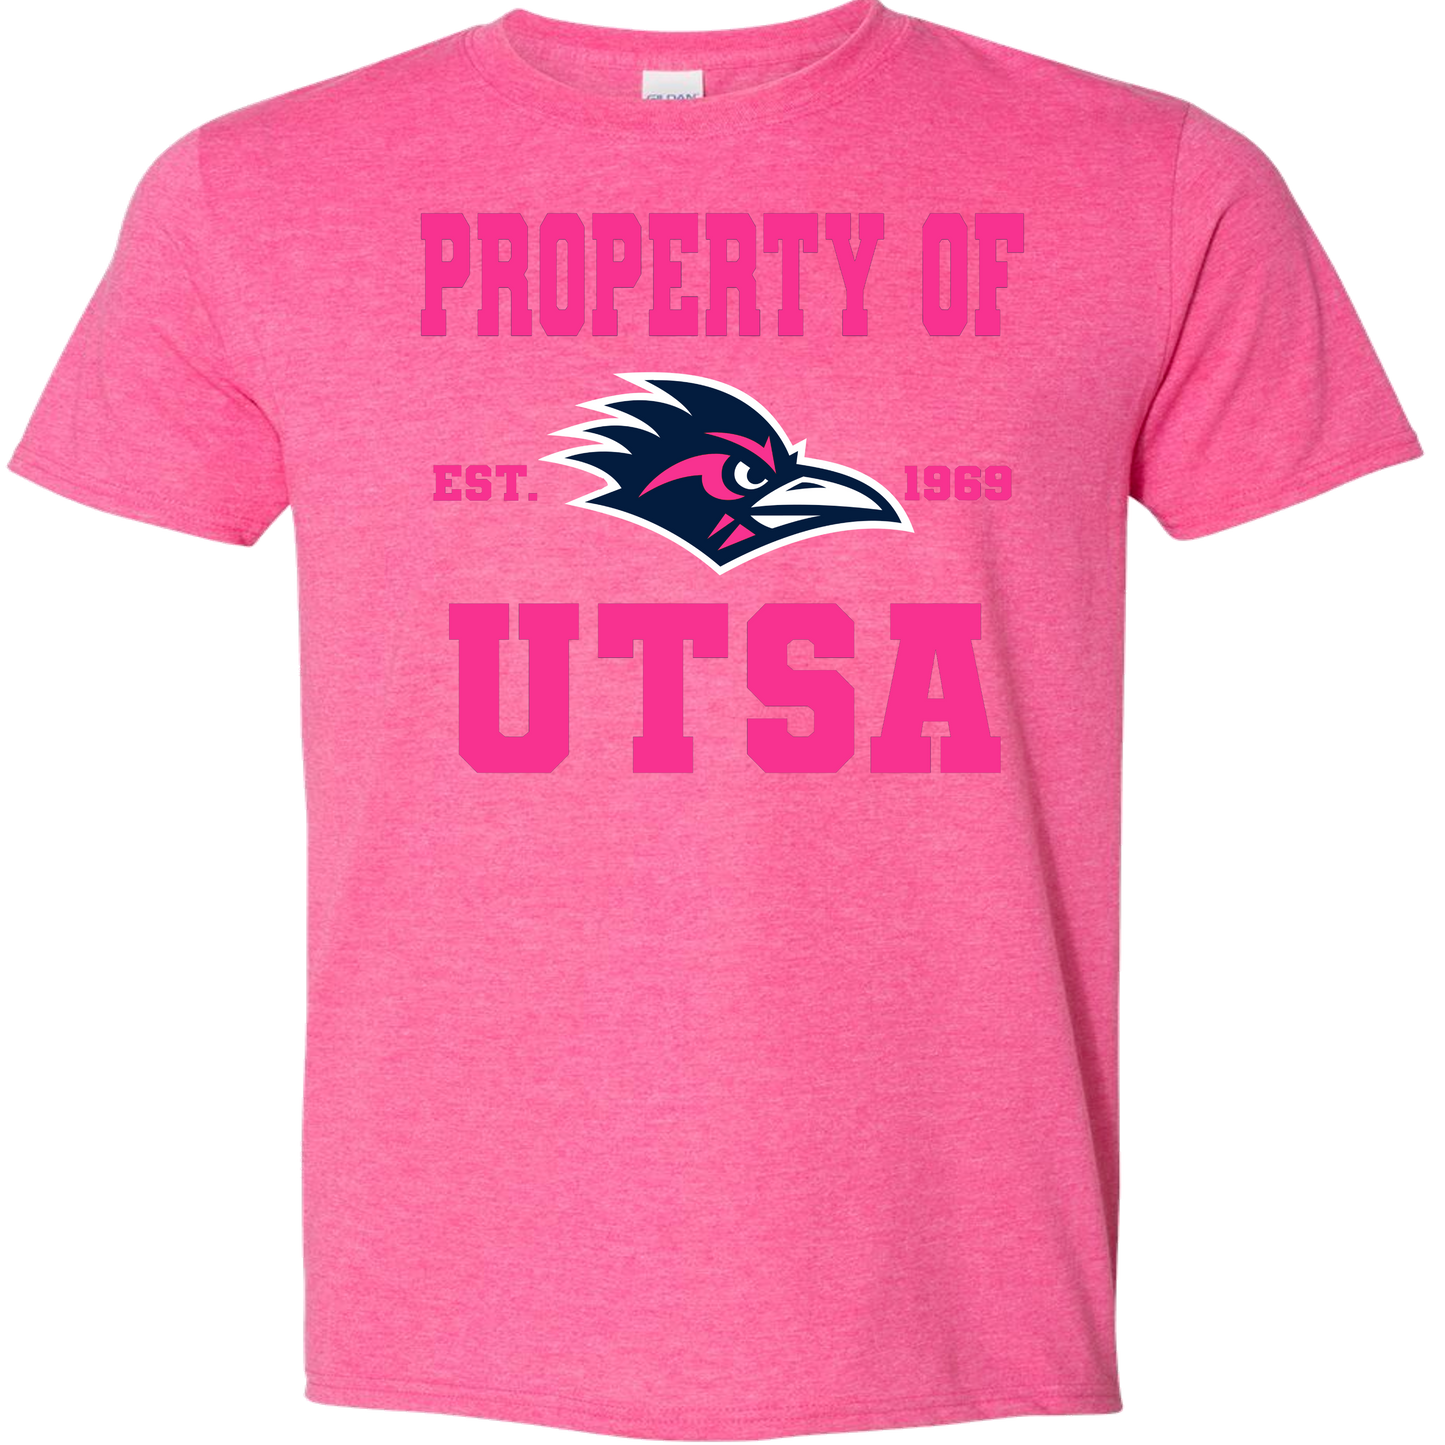 Property UTSA BCA Shirt